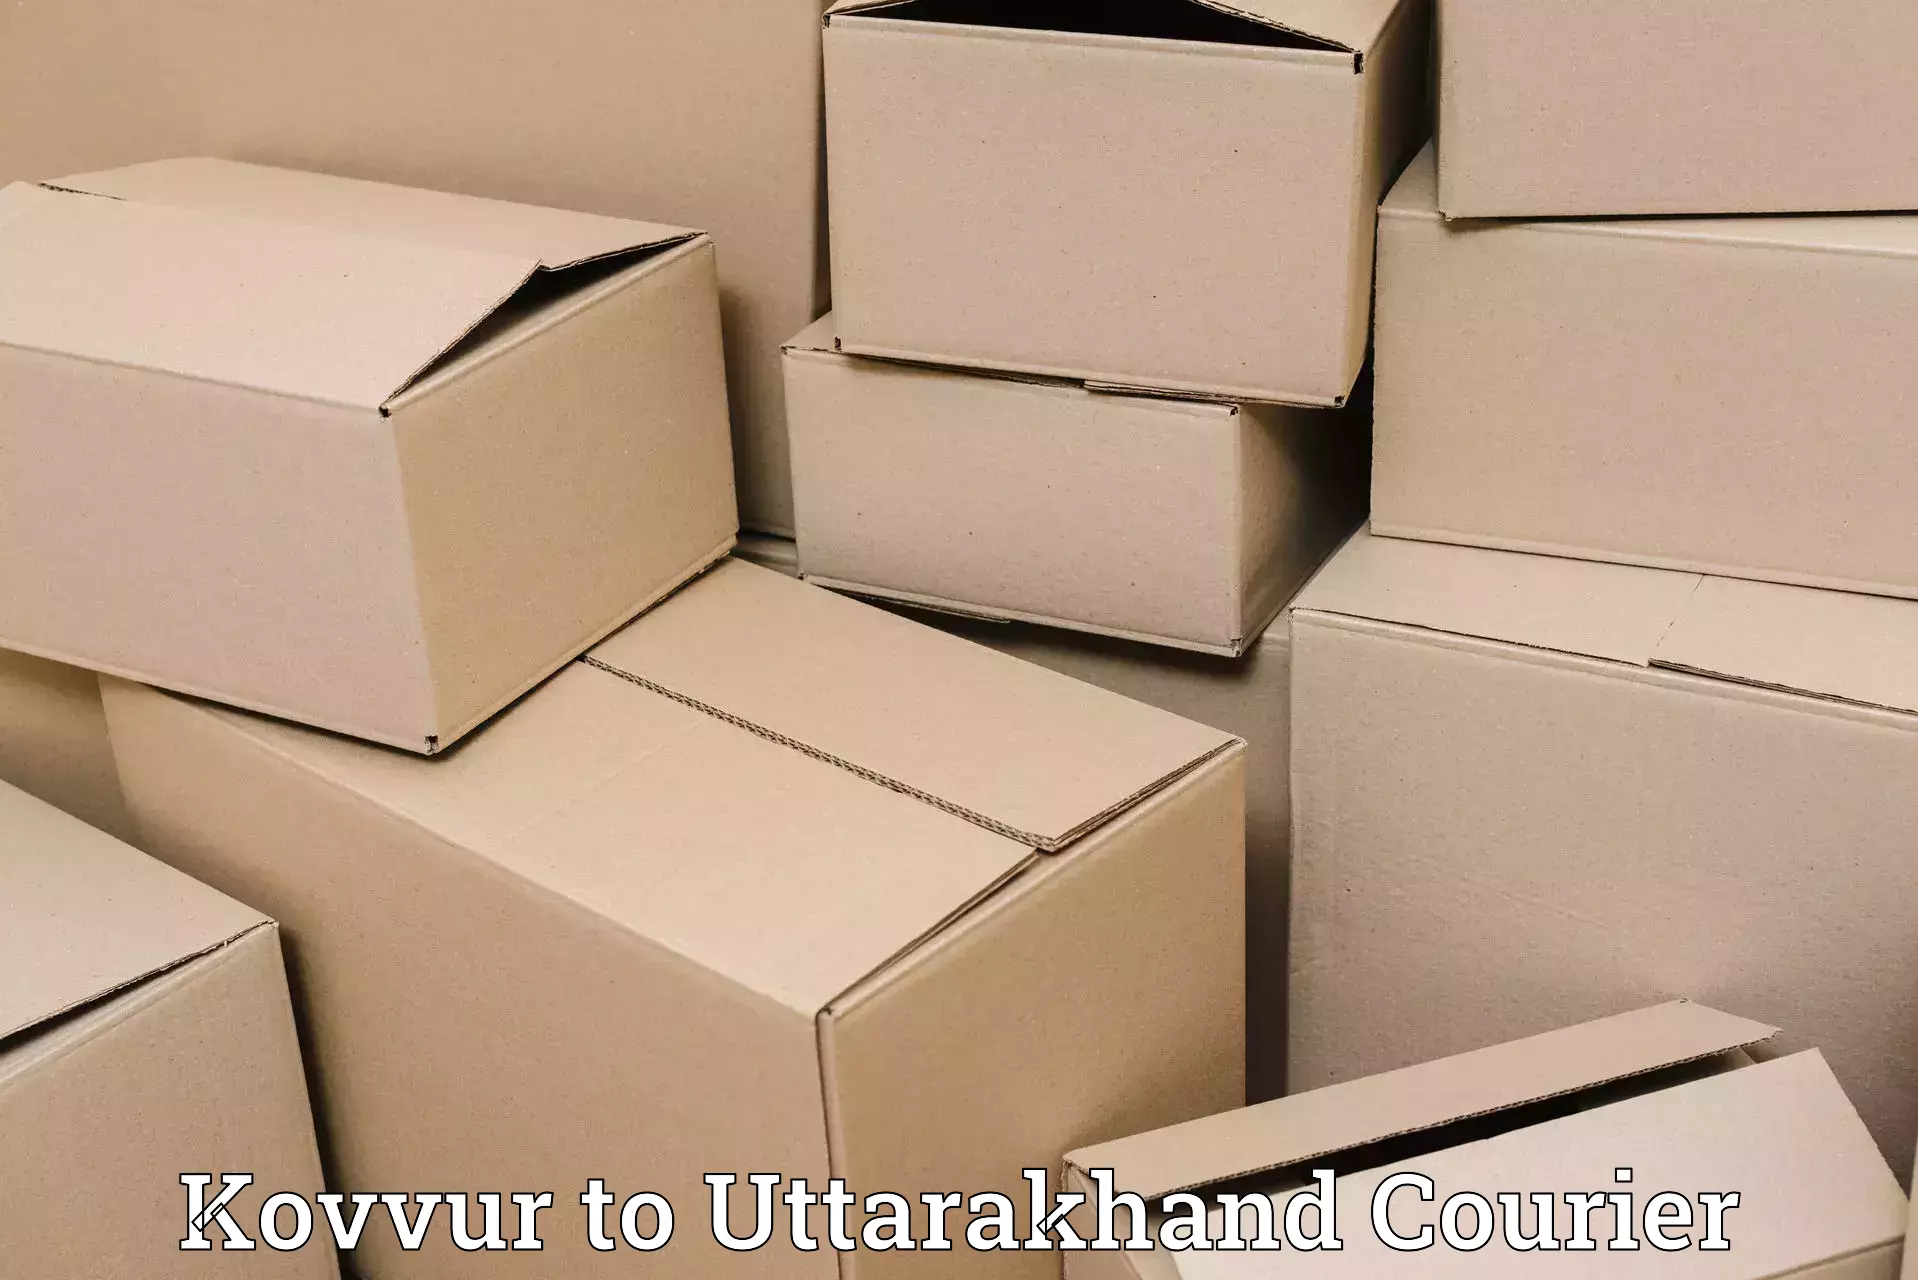 Rural area delivery Kovvur to Uttarkashi